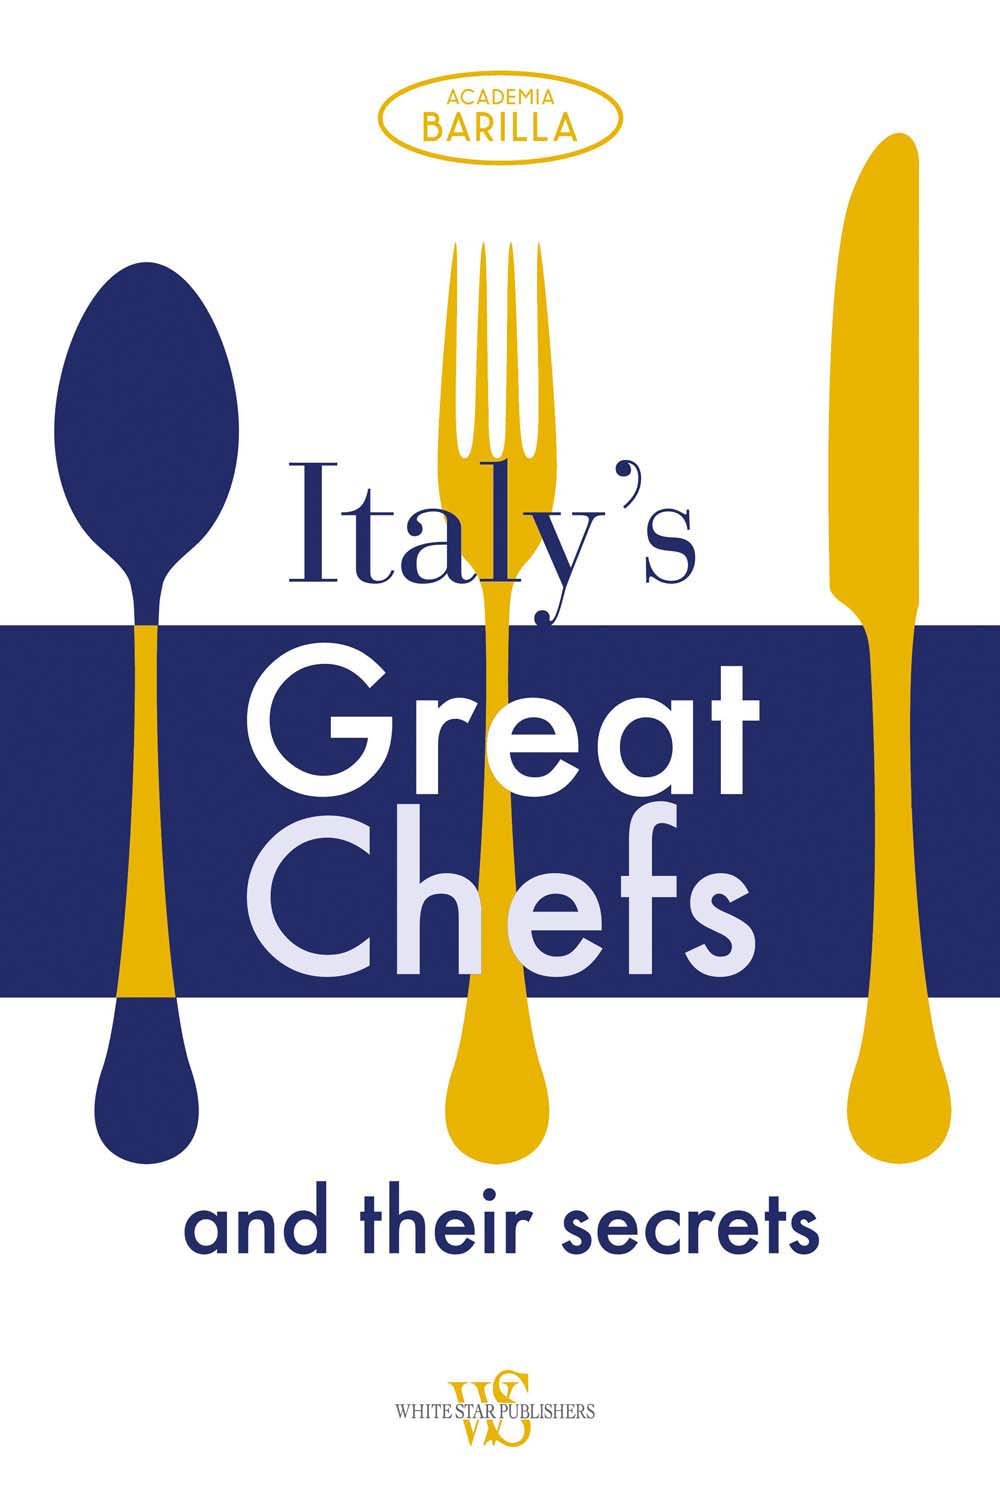 Italy's Great Chefs | Academia Barilla